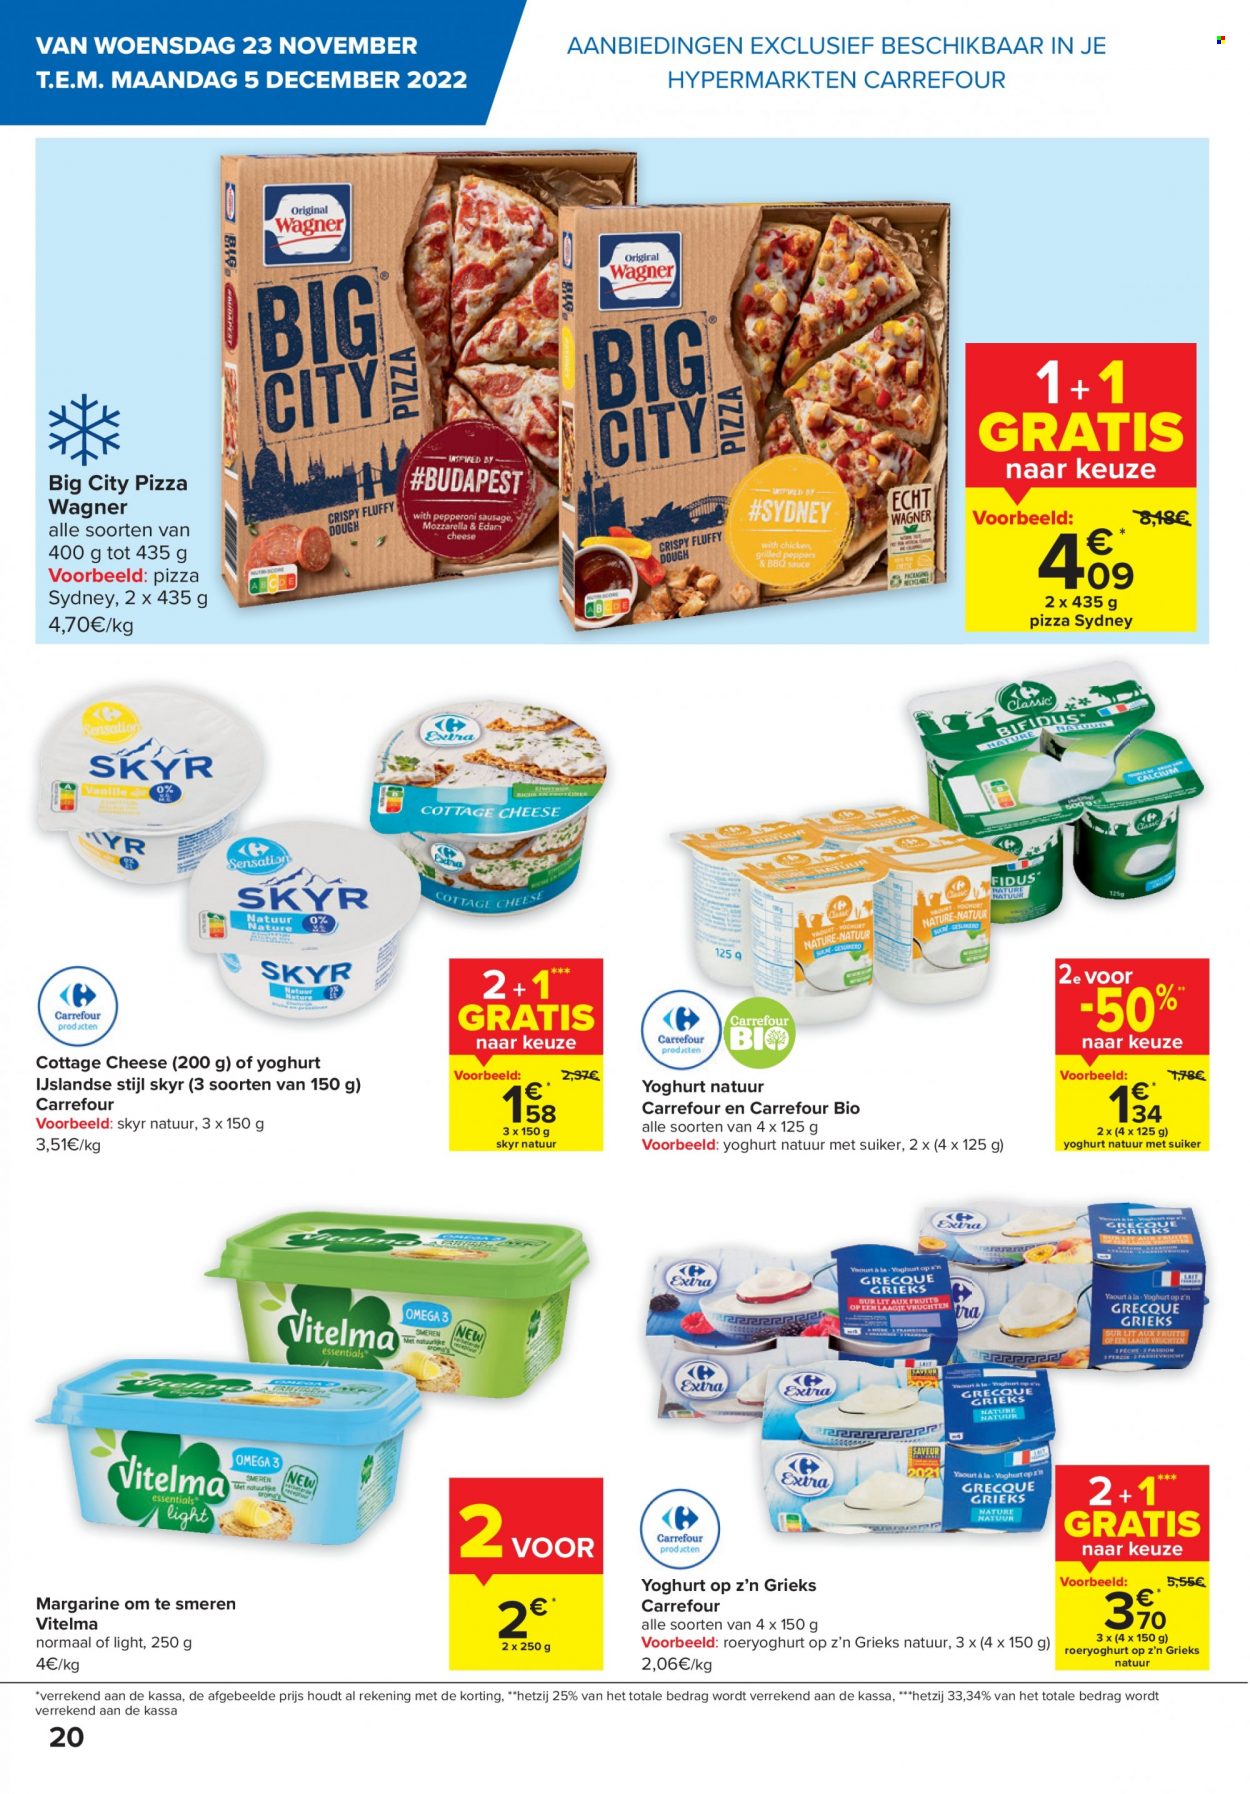 thumbnail - Catalogue Carrefour hypermarkt - 23/11/2022 - 05/12/2022 - Produits soldés - yaourt, skyr, margarine, pizza. Page 20.